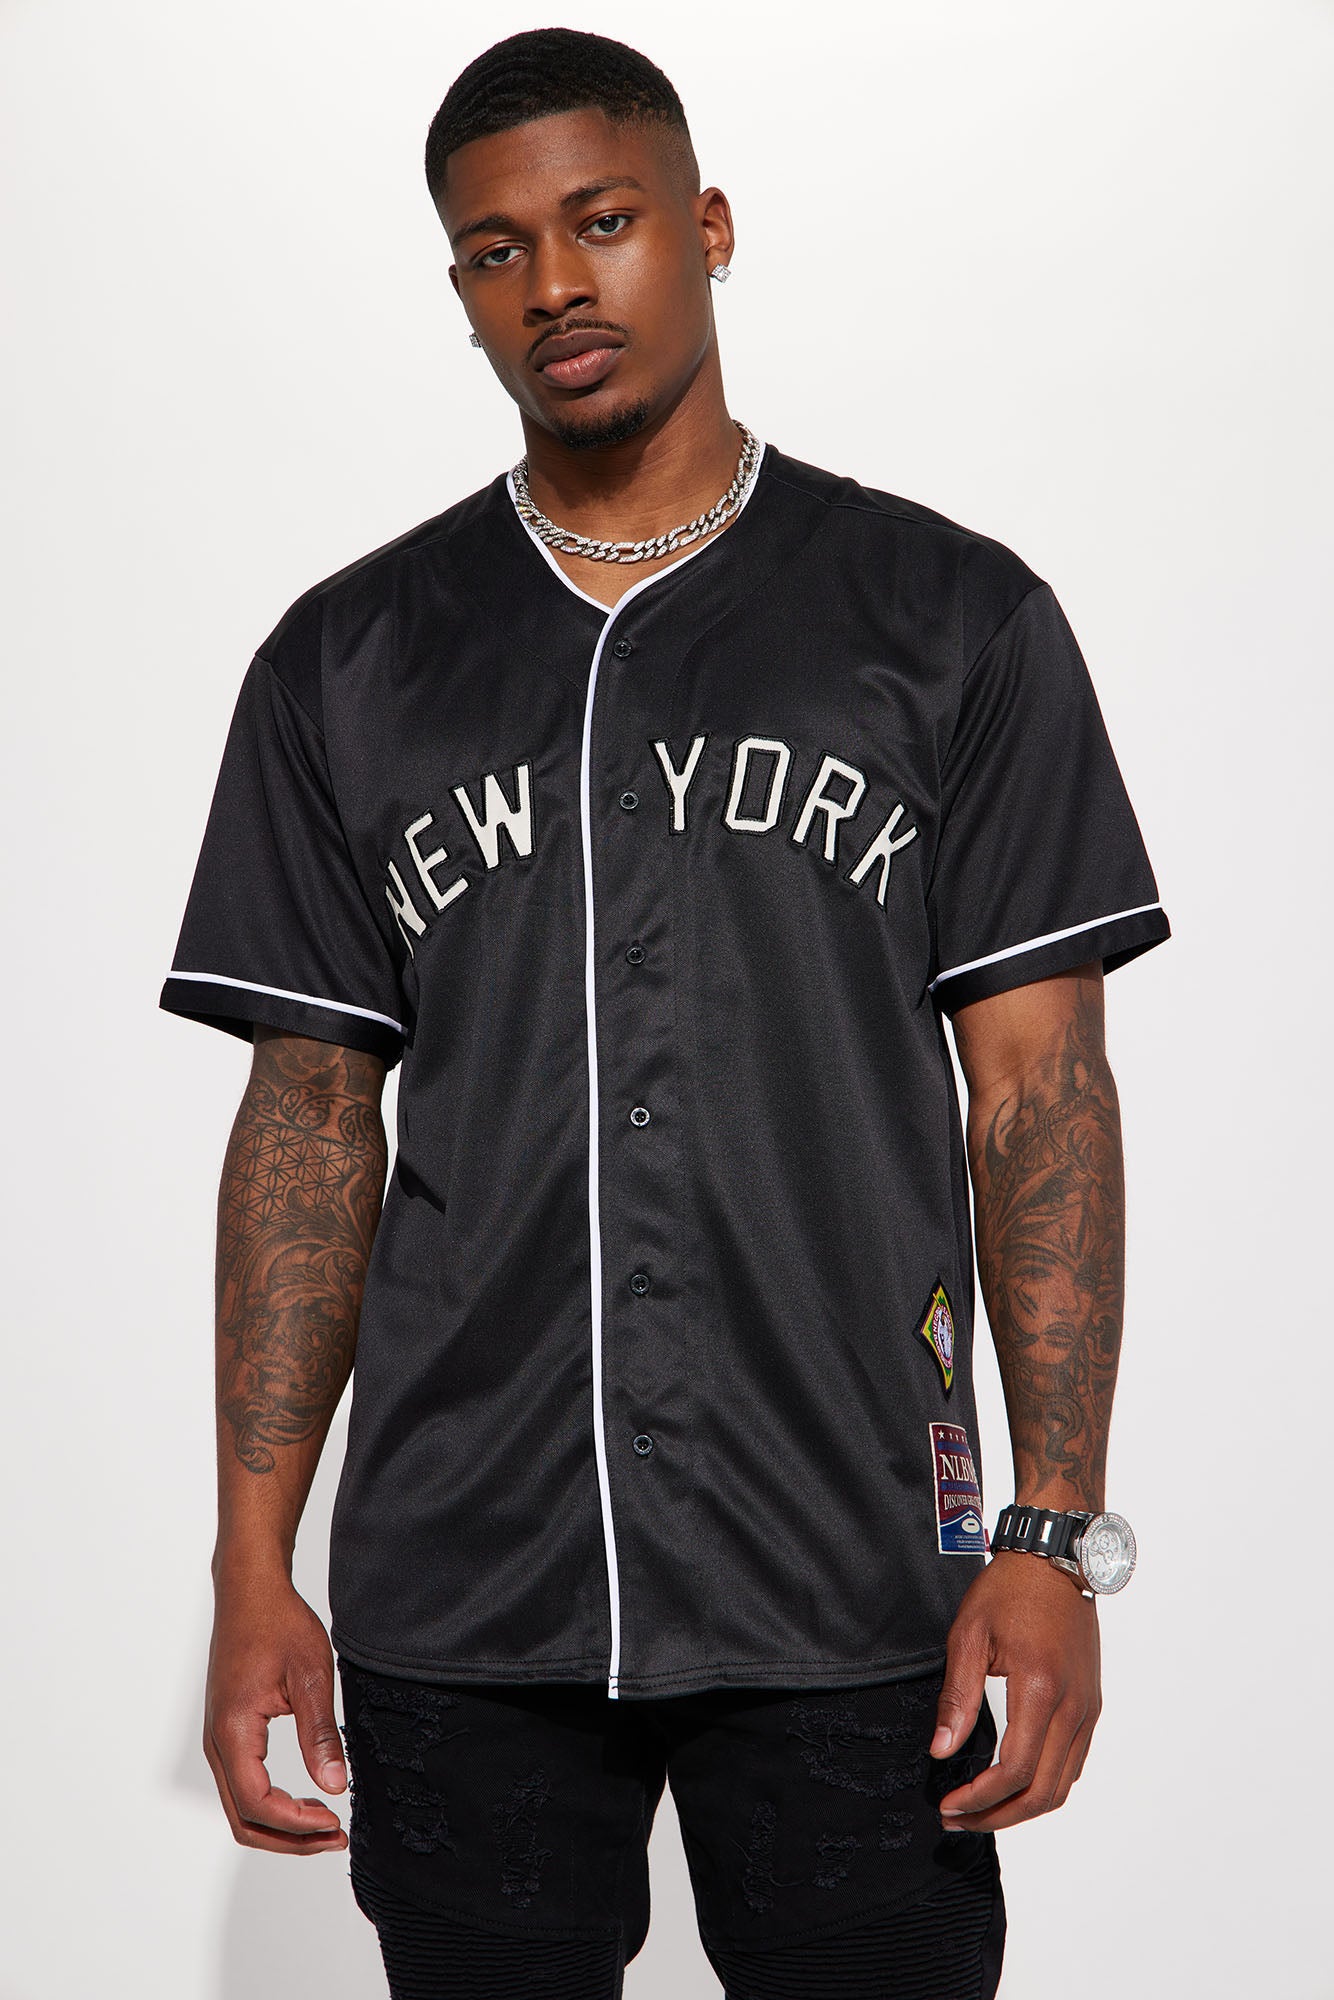 Yankees Jersey top baseball  Women fashion crop top, Baseball